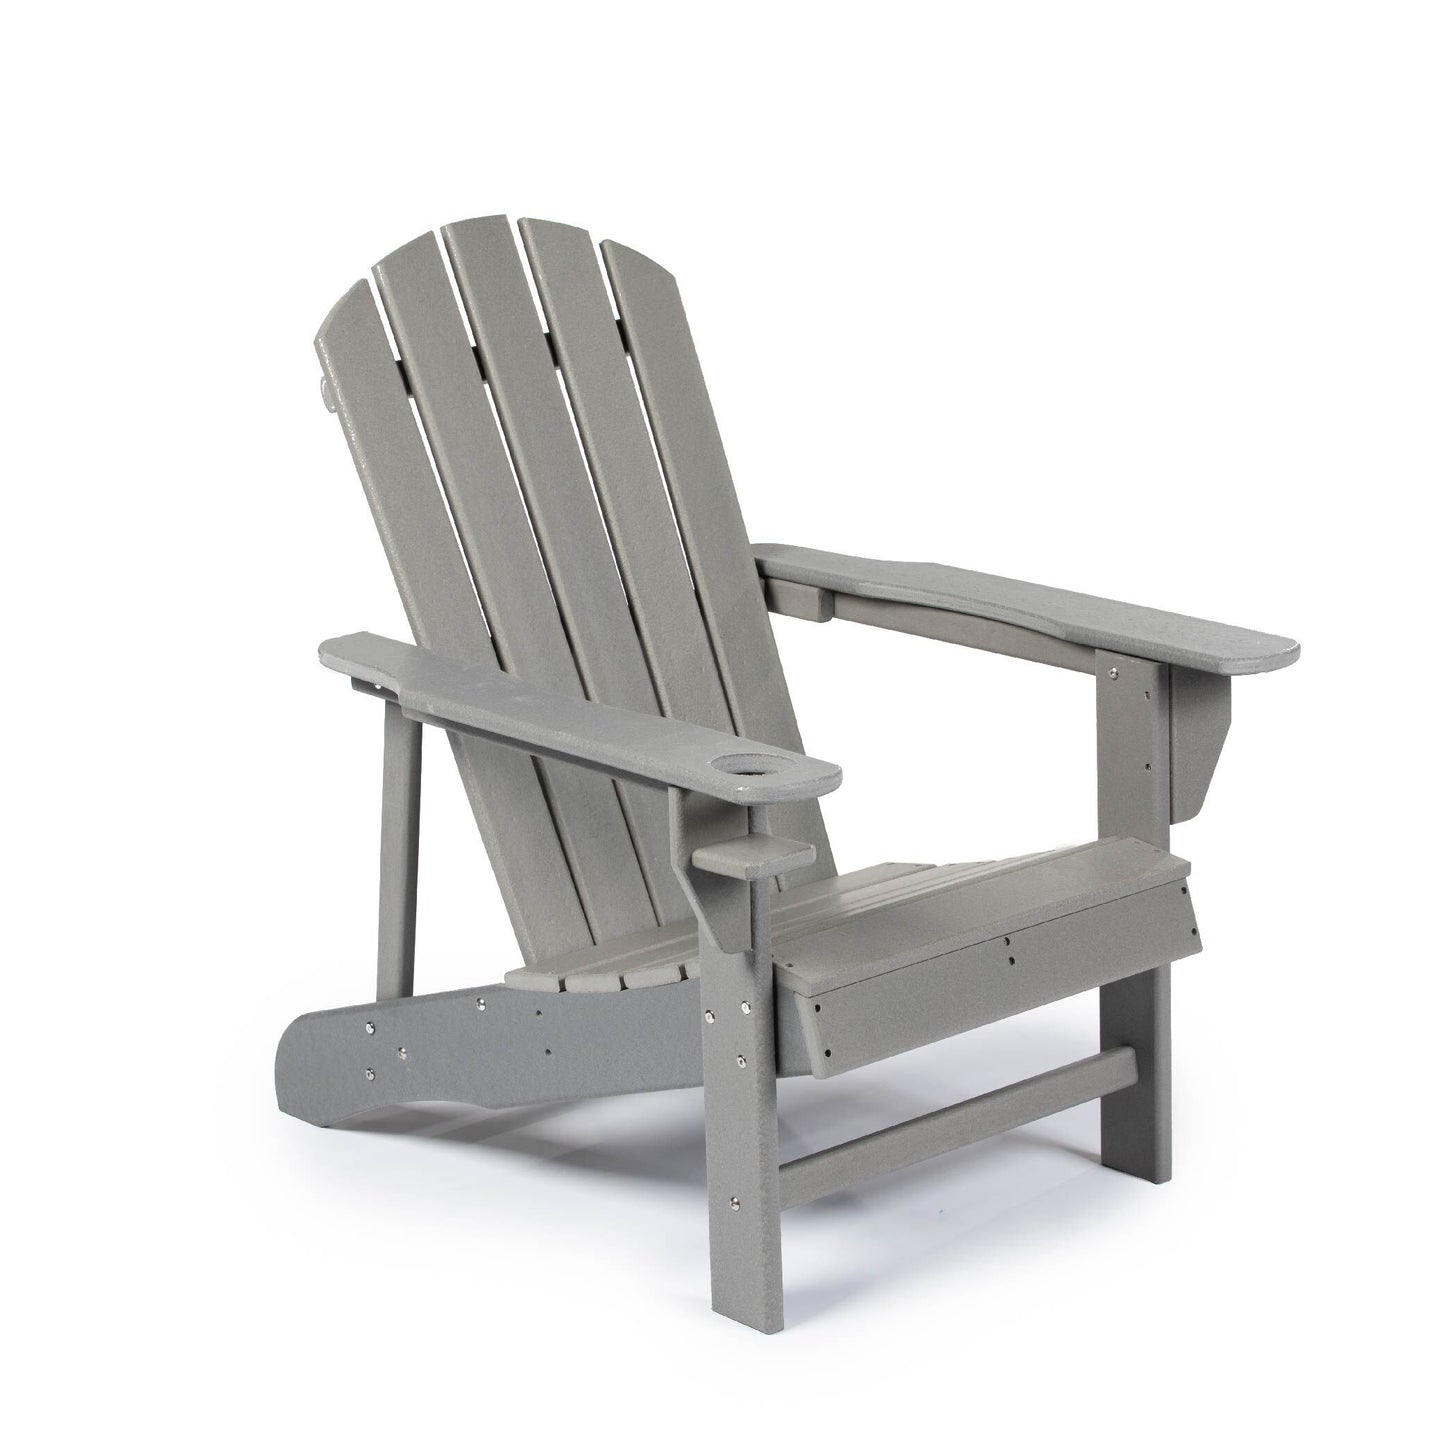 Everwood Hilltop Adirondack Chair - Adirondack Chair Color: Platinum Grey | Platinum Grey - view 10